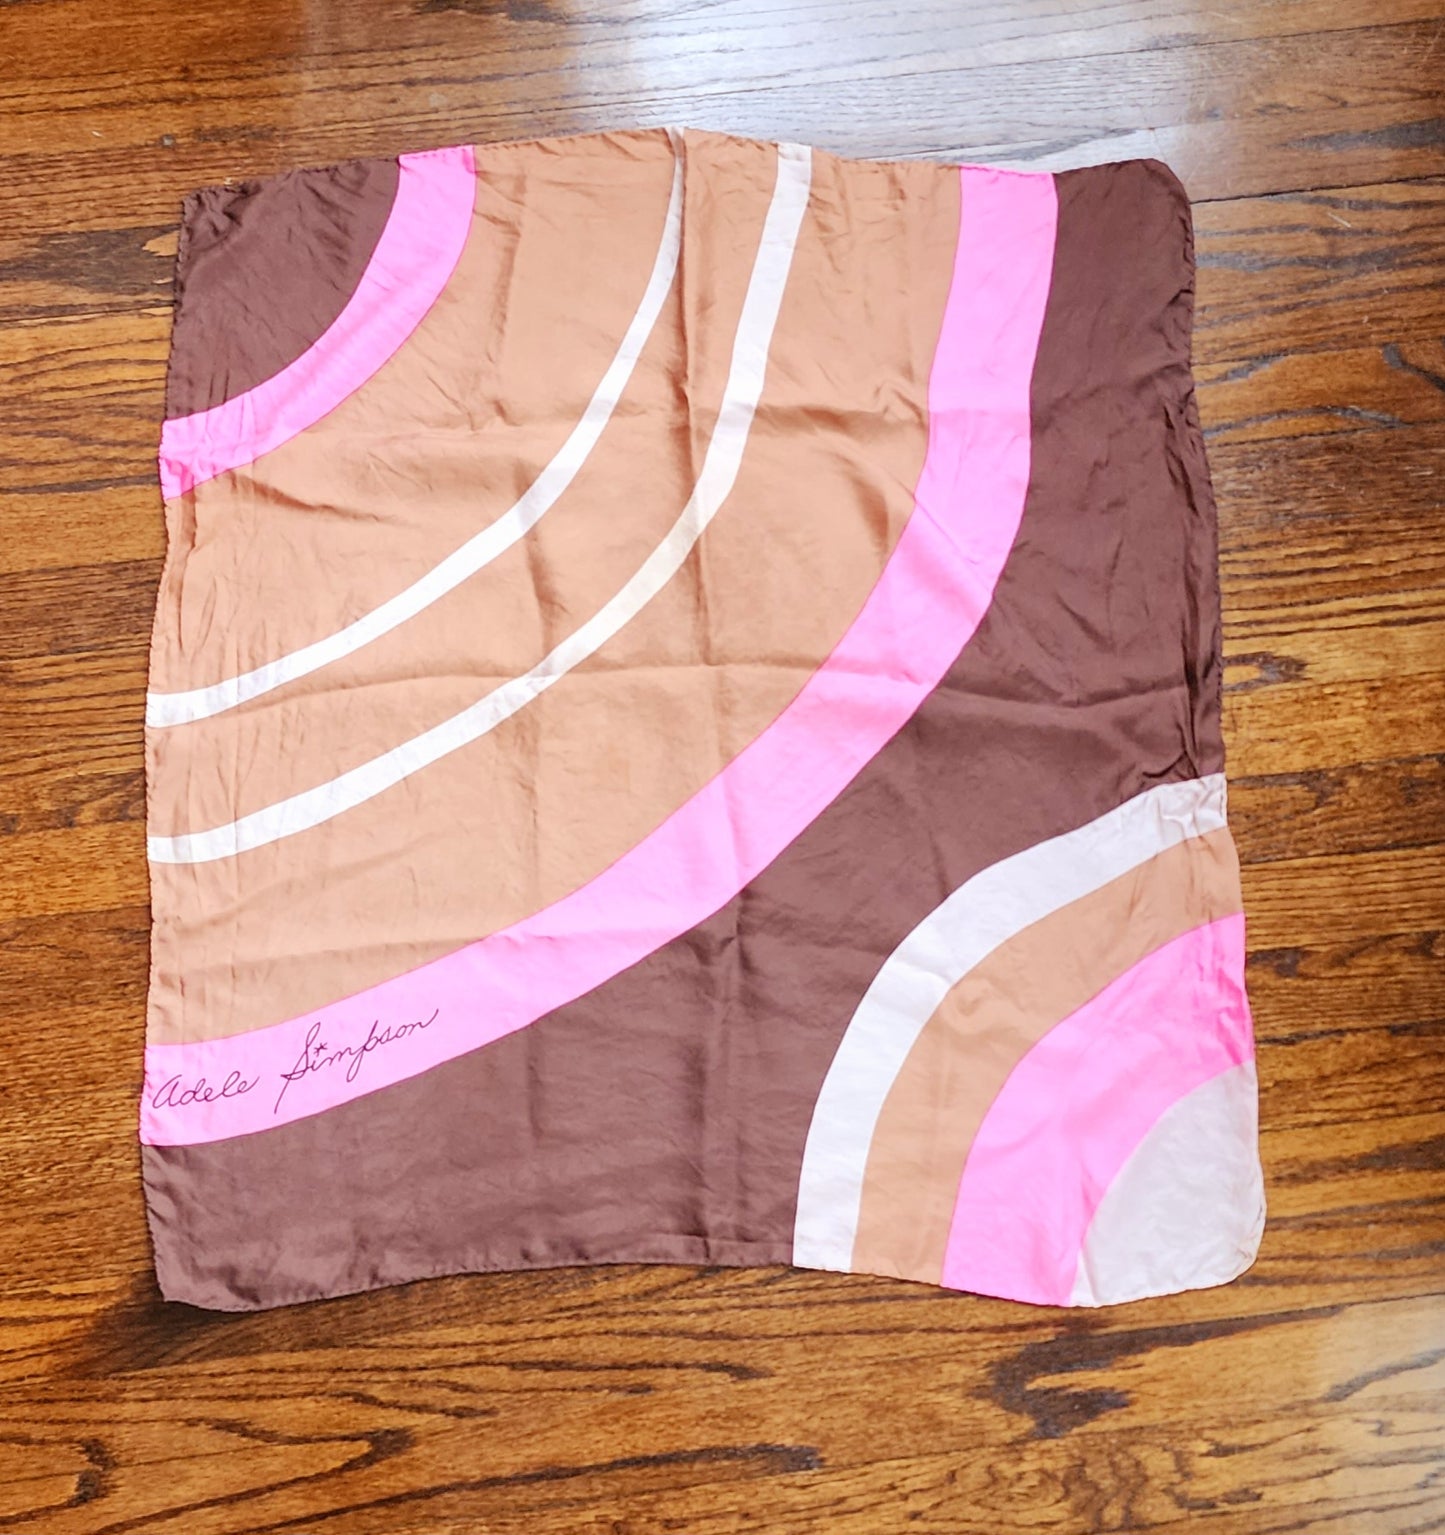 60s Adele Simpson Silk Scarf in Geometric Print in Pink & Brown